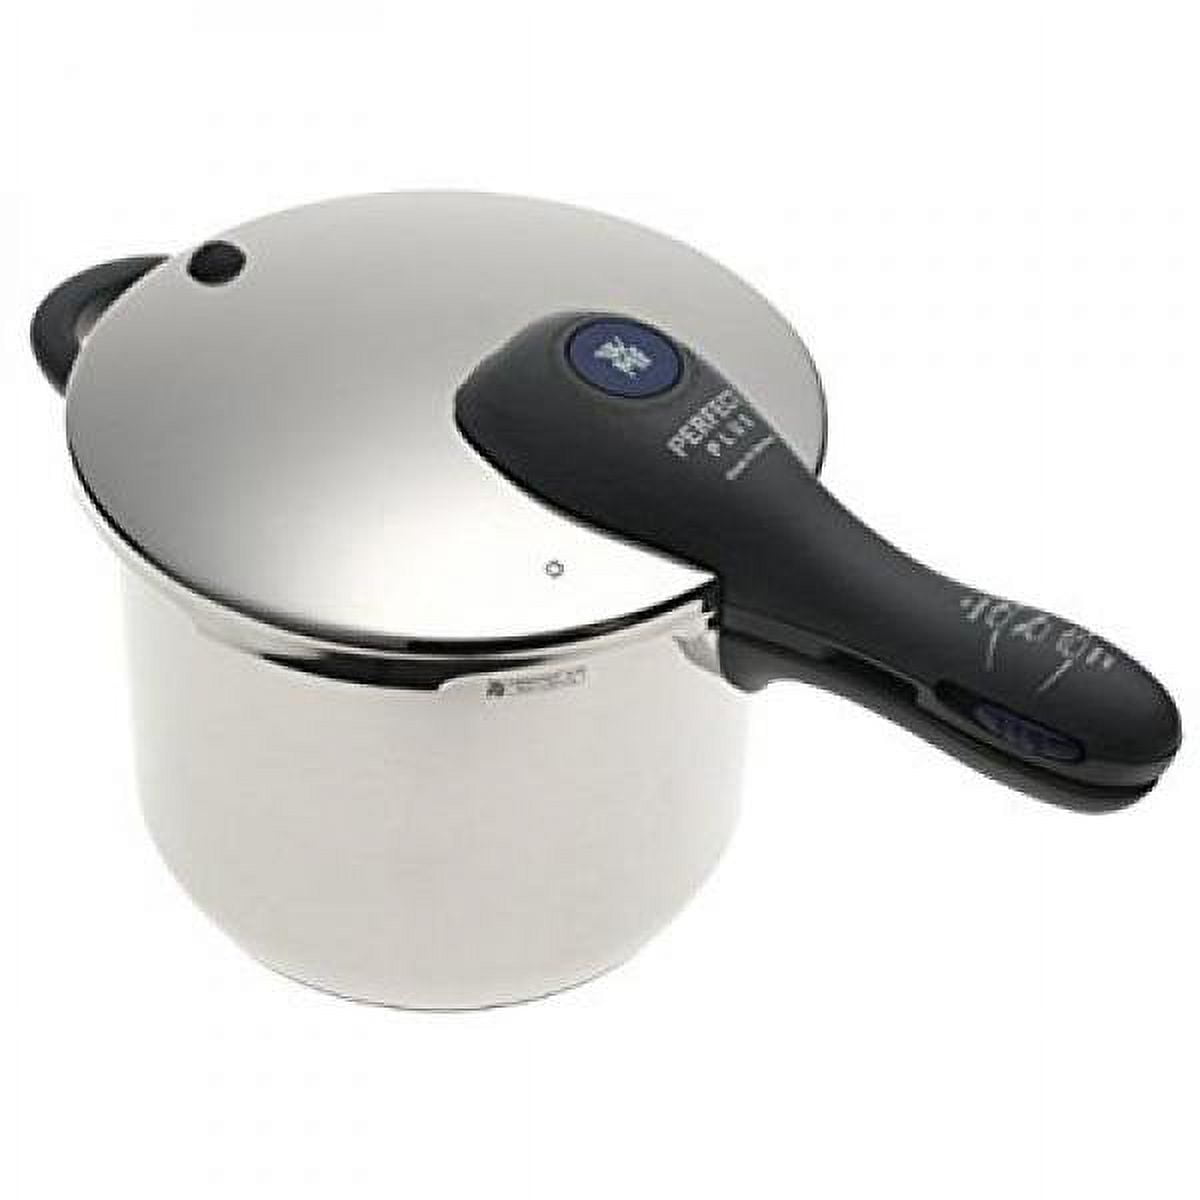 Pressure cooker PERFECT PLUS 6.5 l, ⌀ 22 cm, with insert, WMF